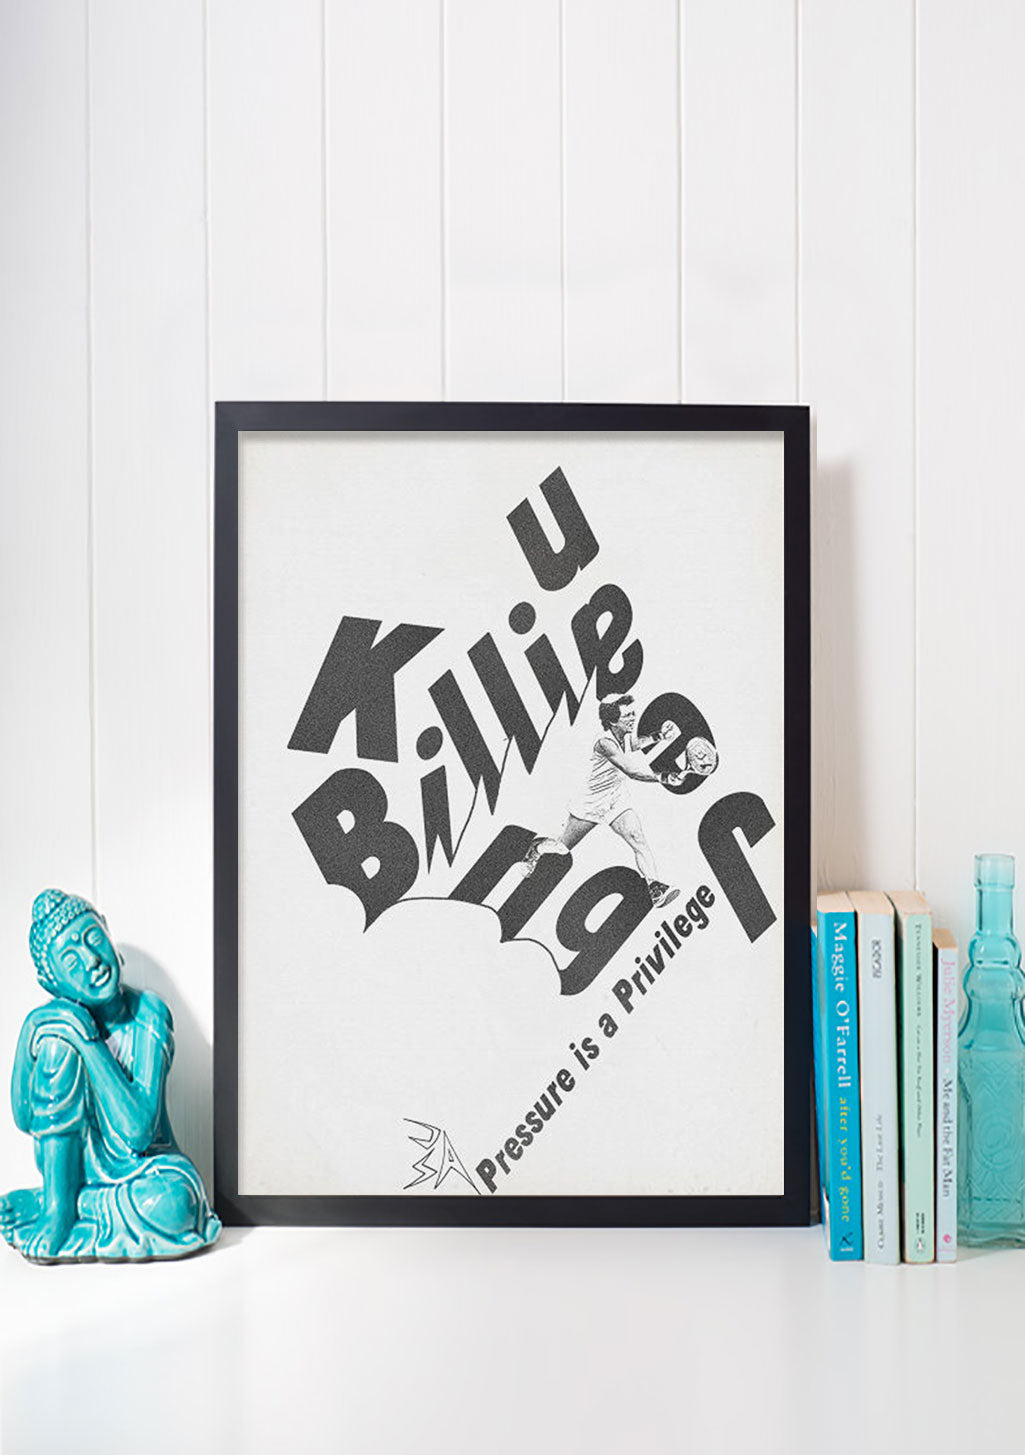 Billie Jean King 1